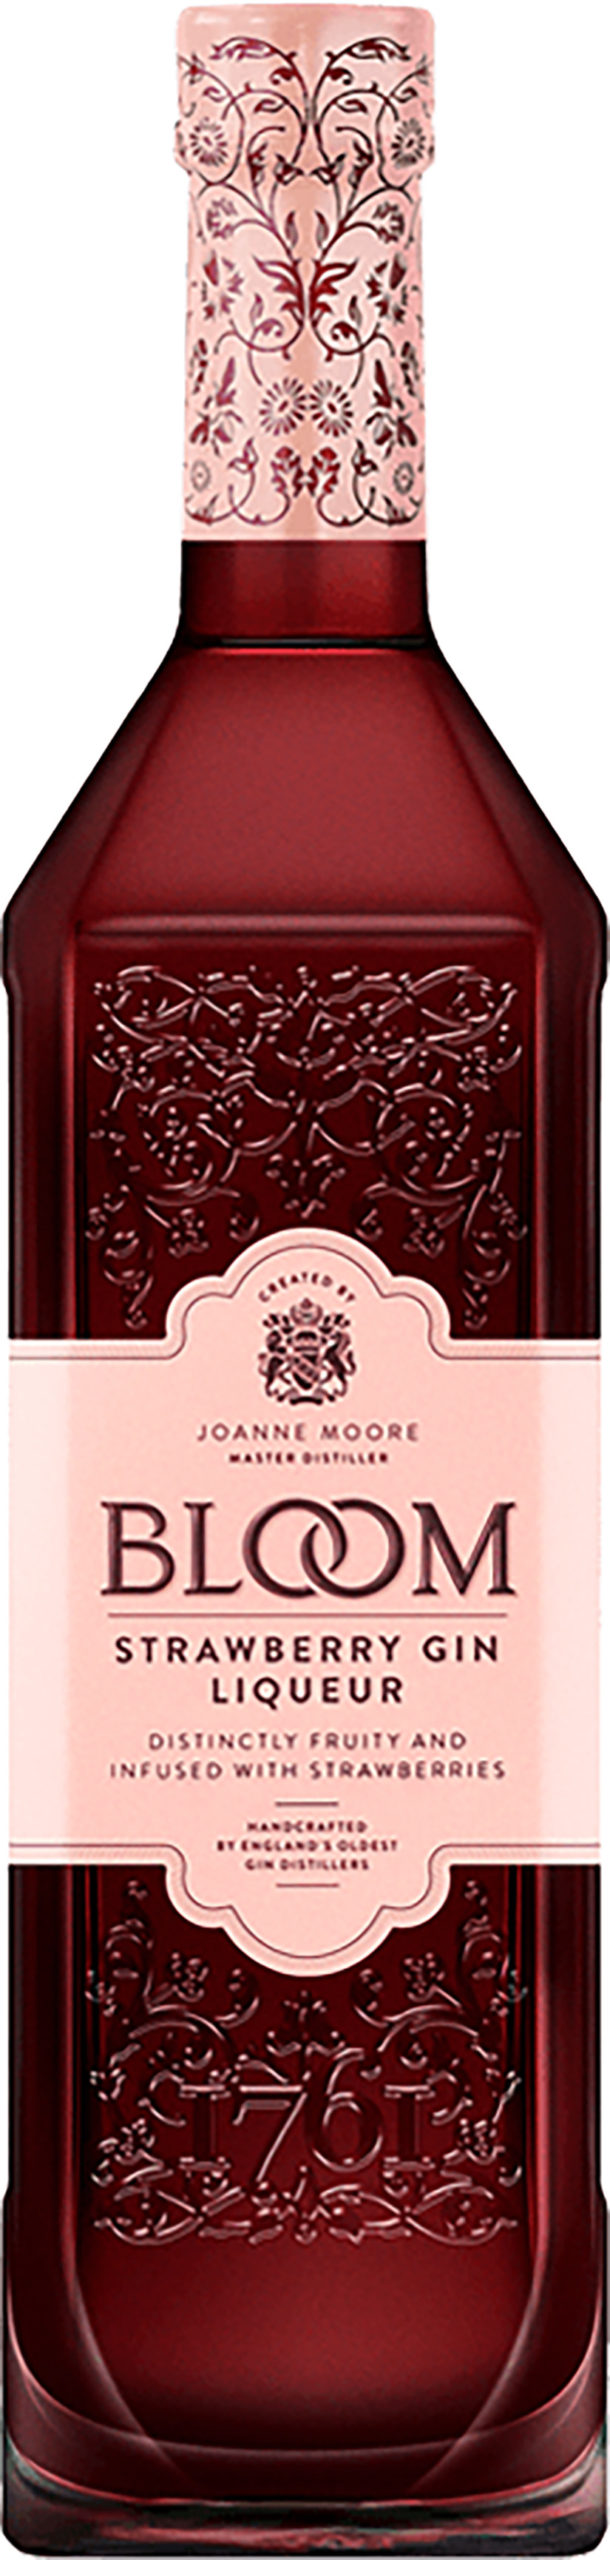 Bloom Strawberry Gin Liqueur